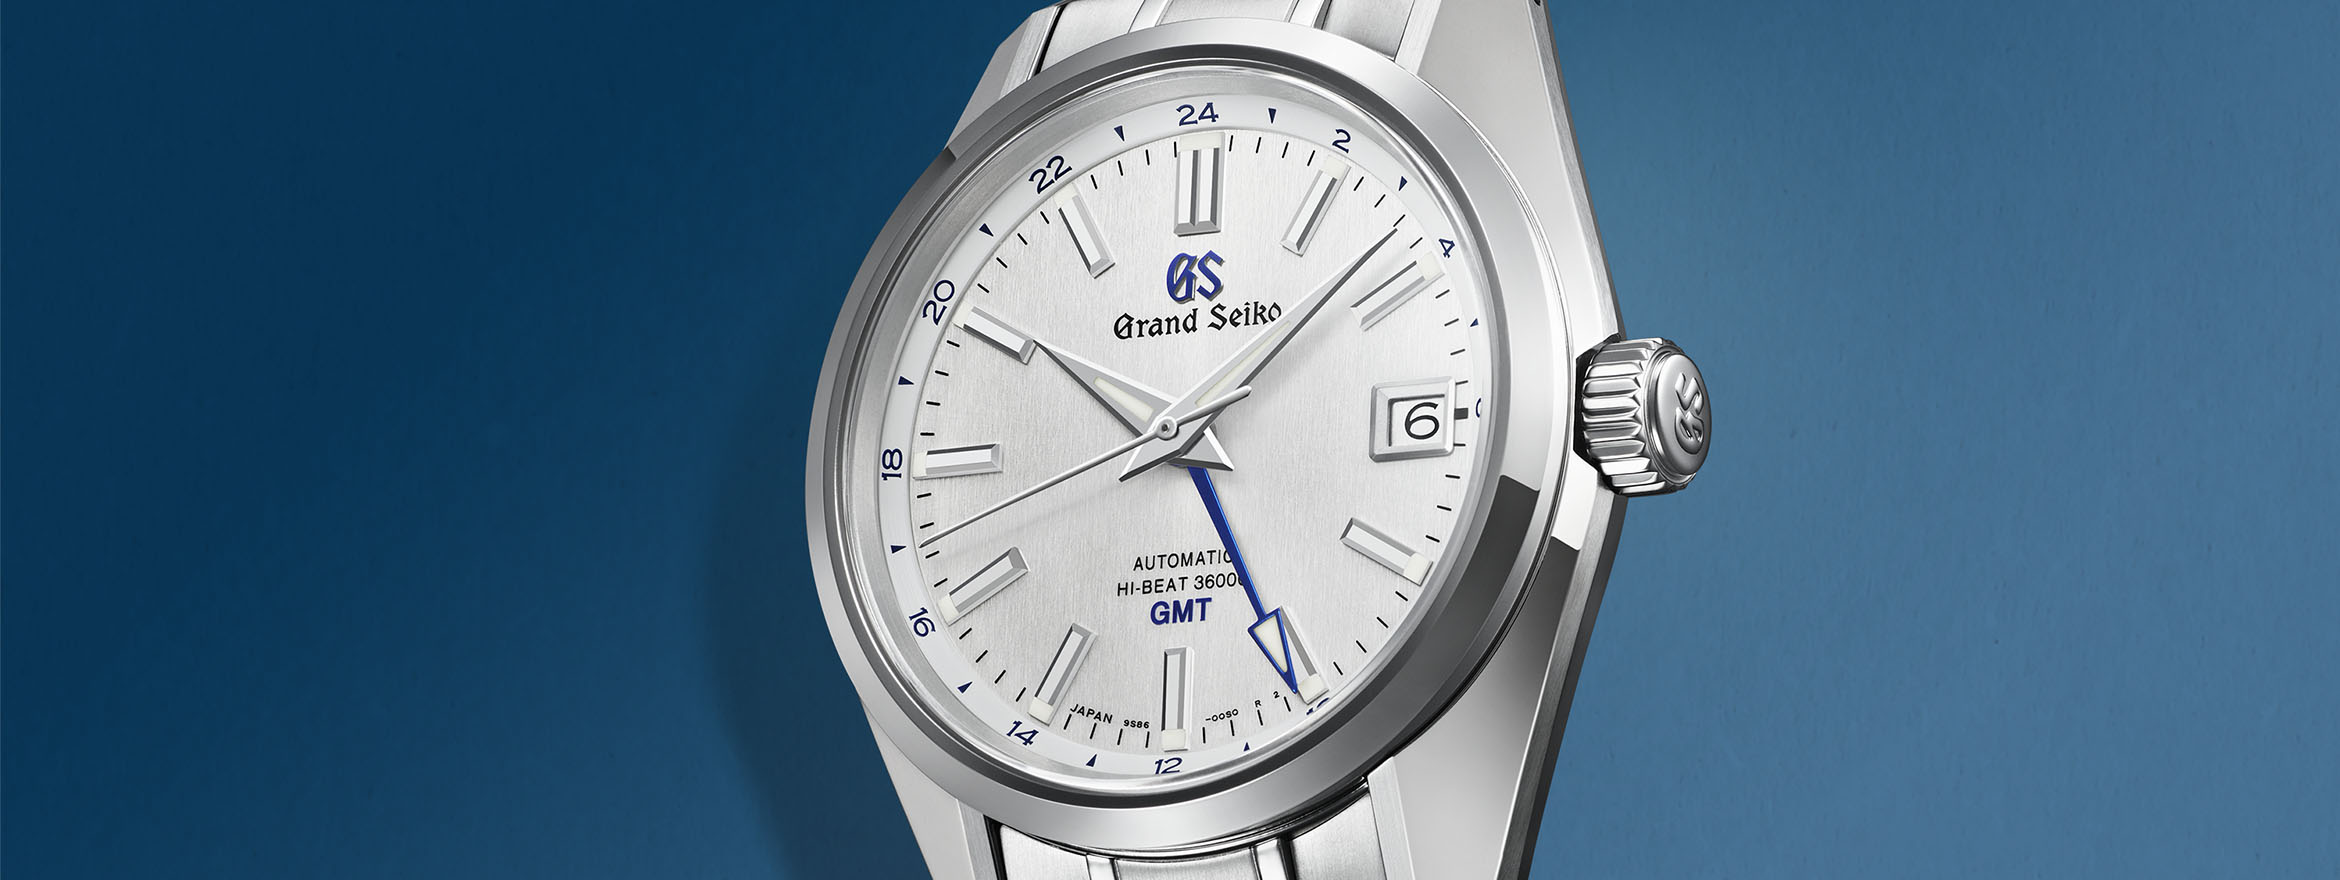 Discover the new Grand Seiko Hi-Beat 36000 GMT watch at Watches of Switzerland NEX